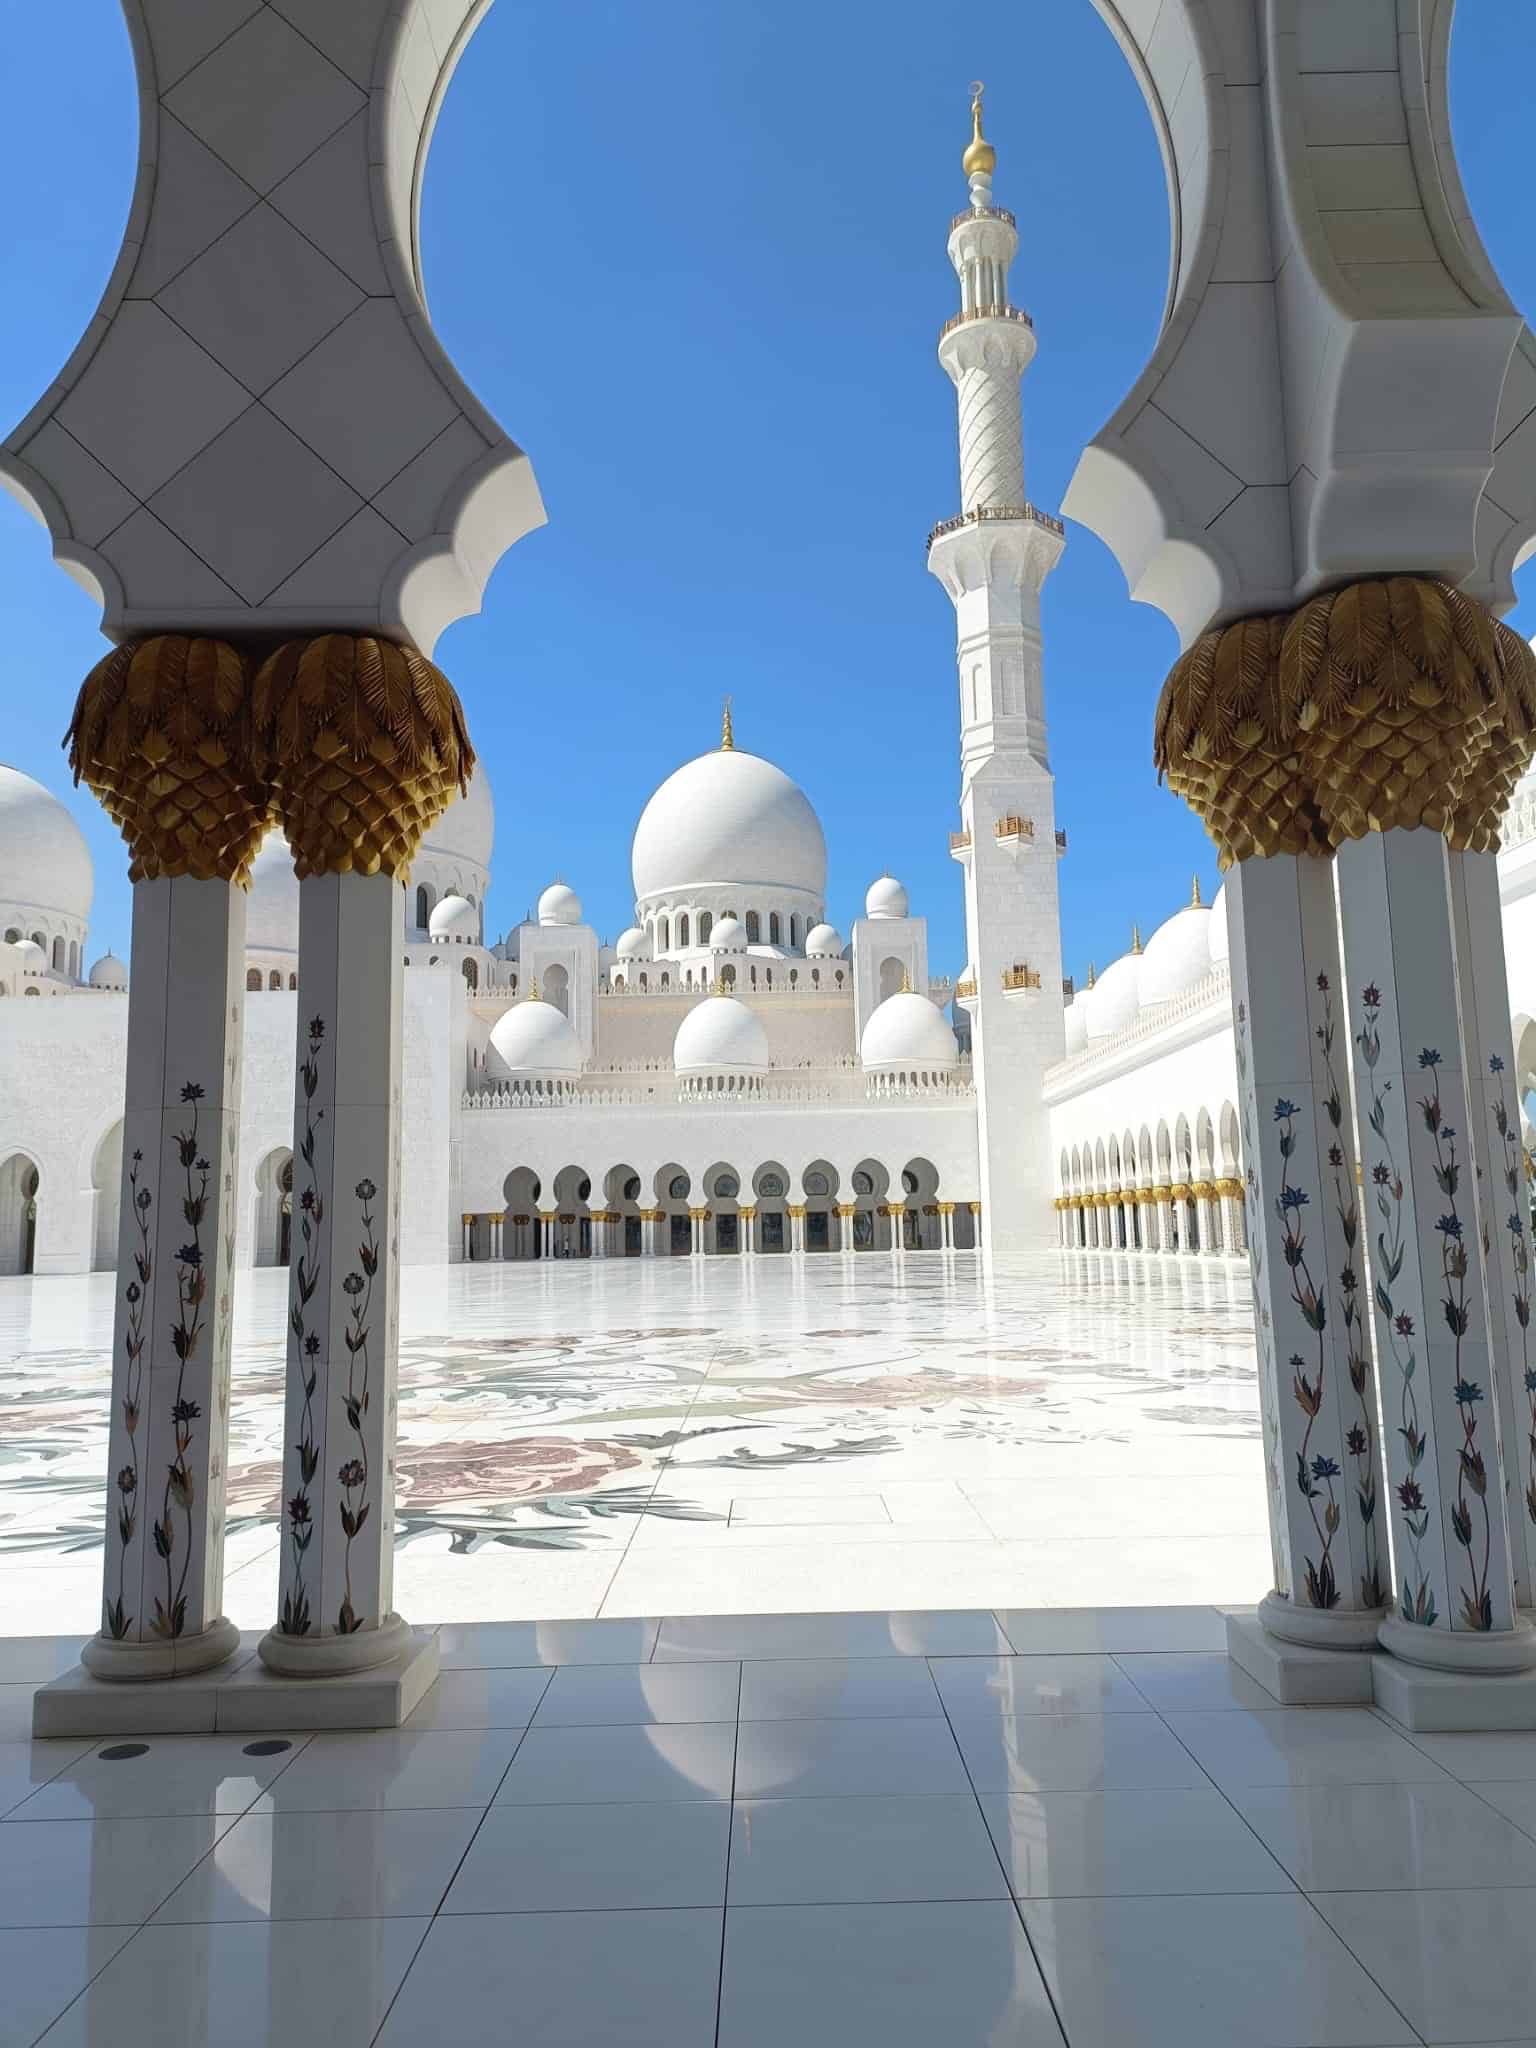 Can you pray tahiyatul masjid between asr and maghrib or a forbidden time?